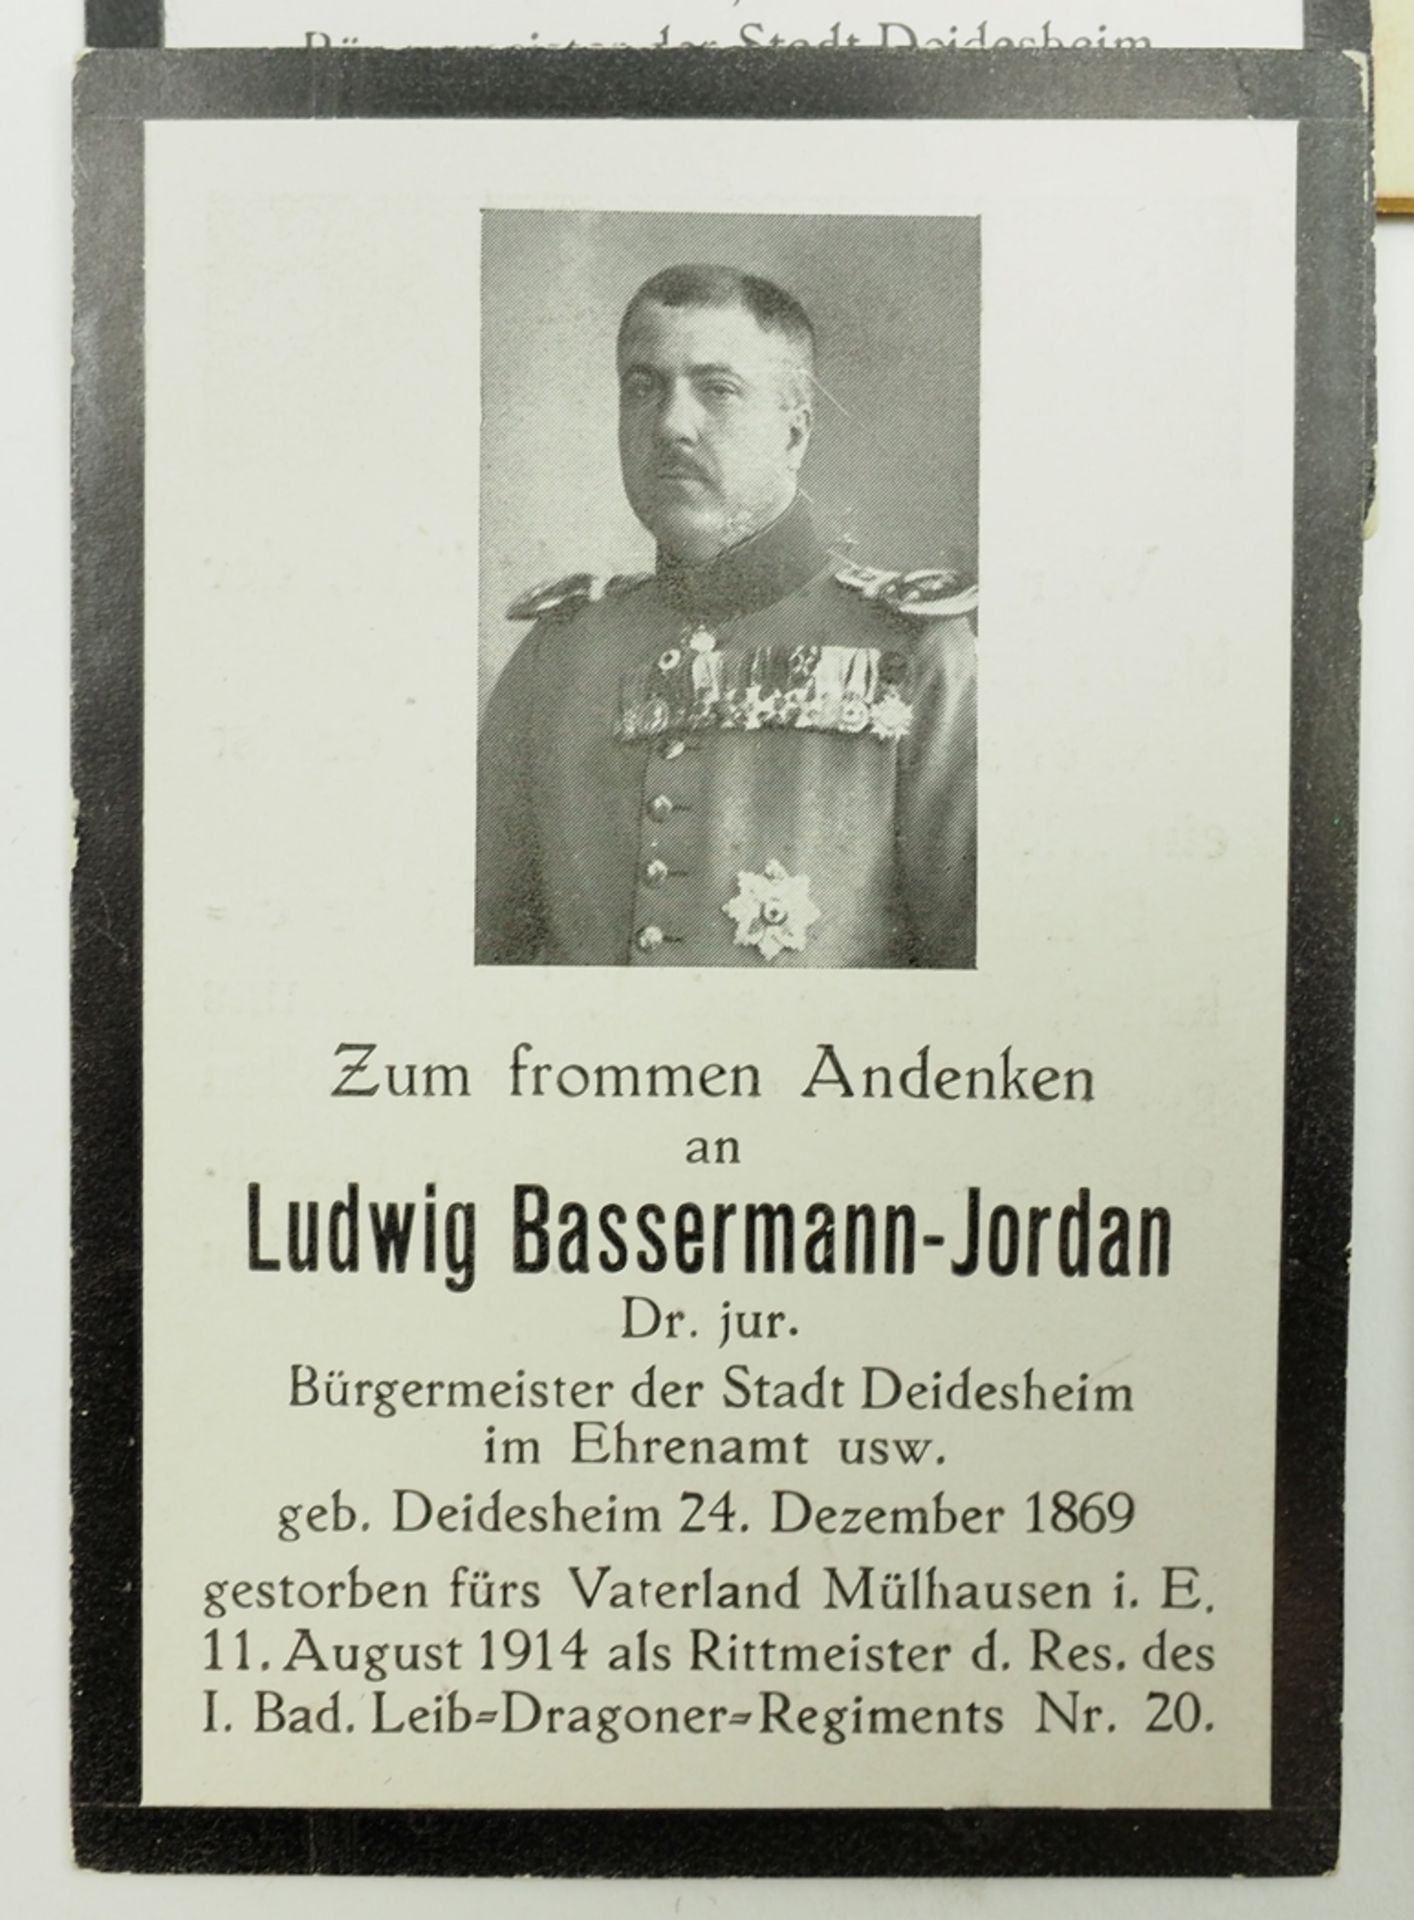 Dr. jur. Ludwig Bassermann-Jordan: Foto Lot. - Bild 2 aus 5